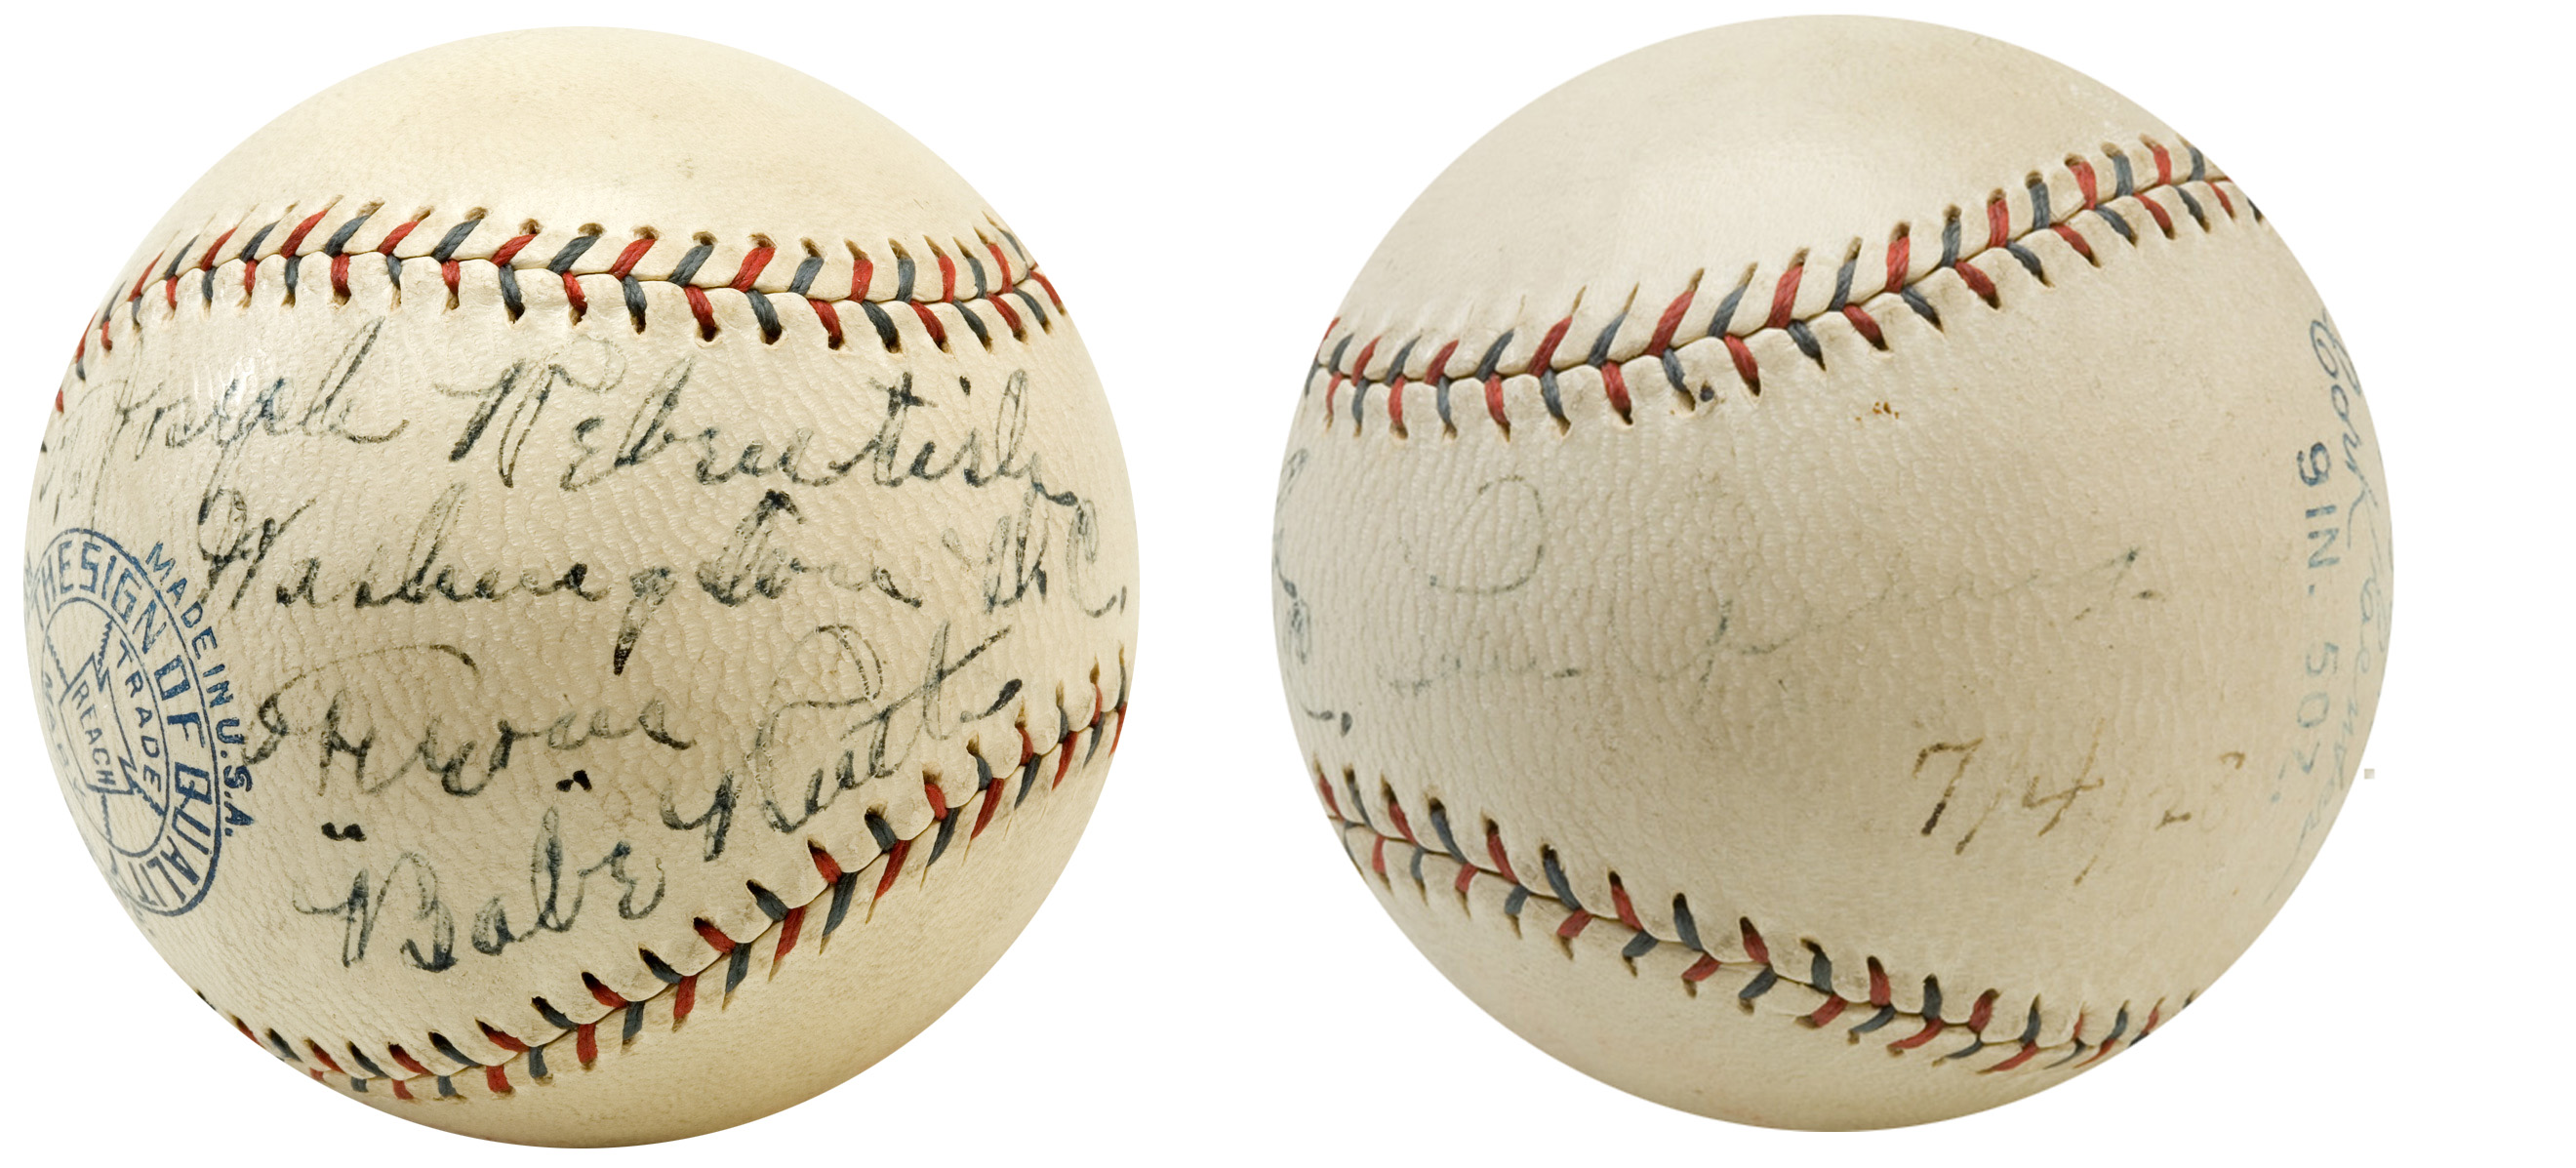 1927 New York Yankees signed baseball